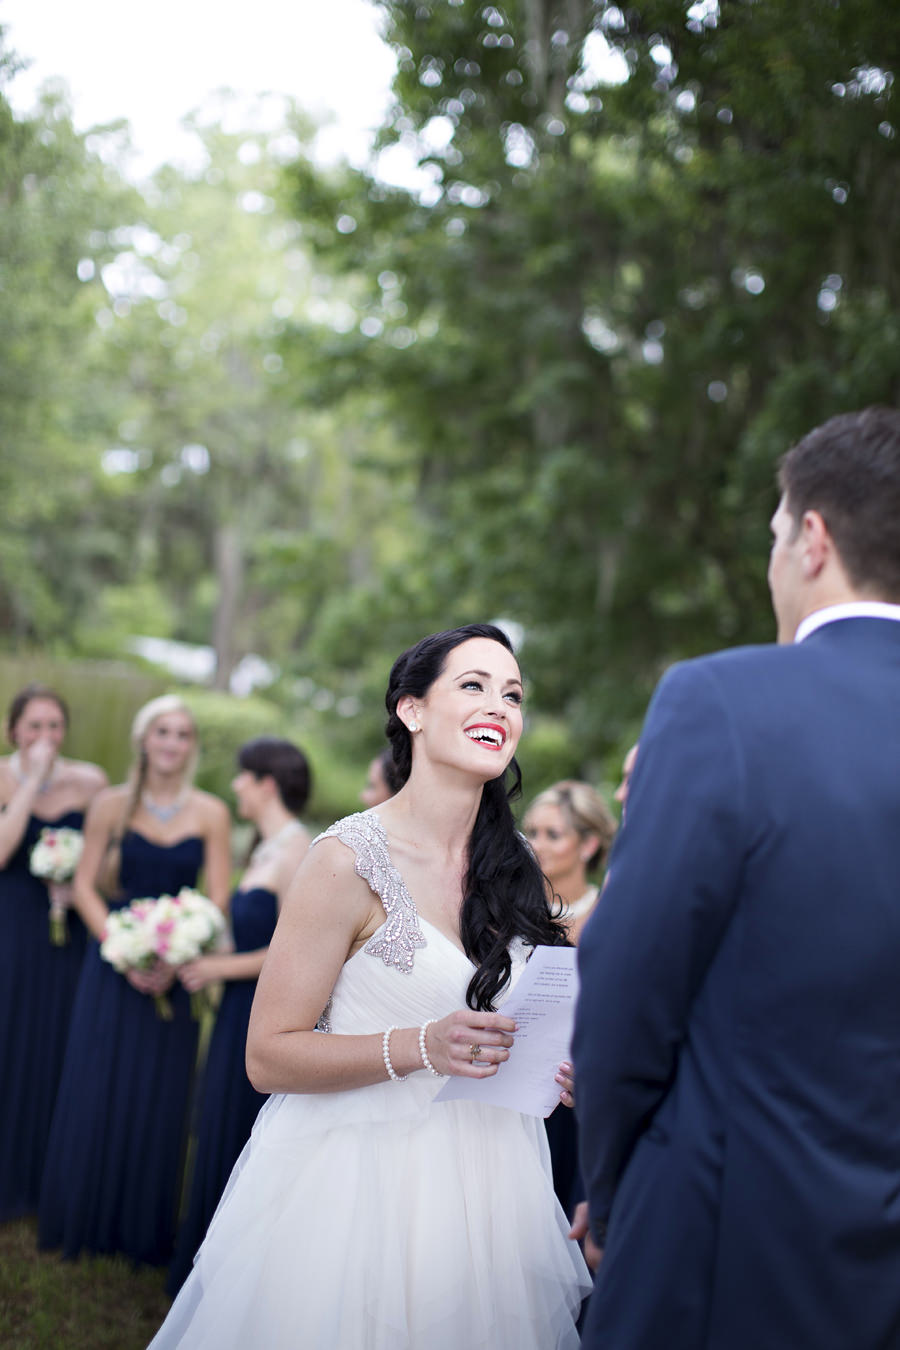 Bride Reading Vows during Wedding Ceremony | Tampa Bay Wedding Photographer Djamel Photography